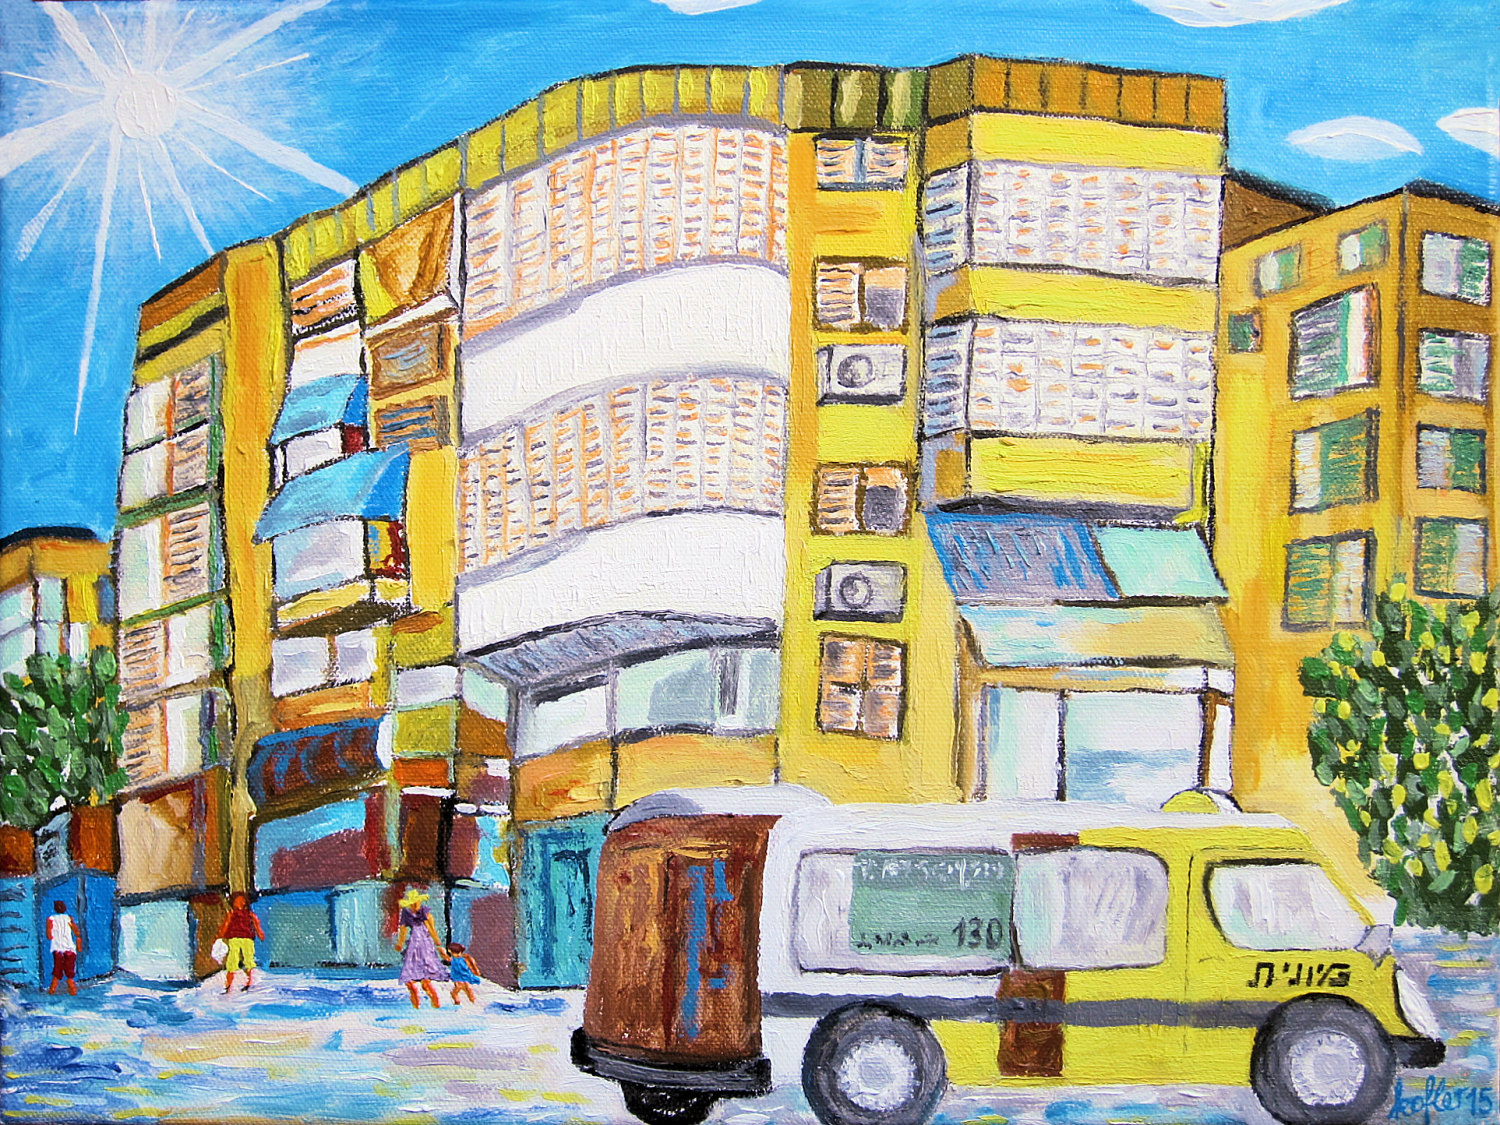 Painting: Dizengoff Street 2015